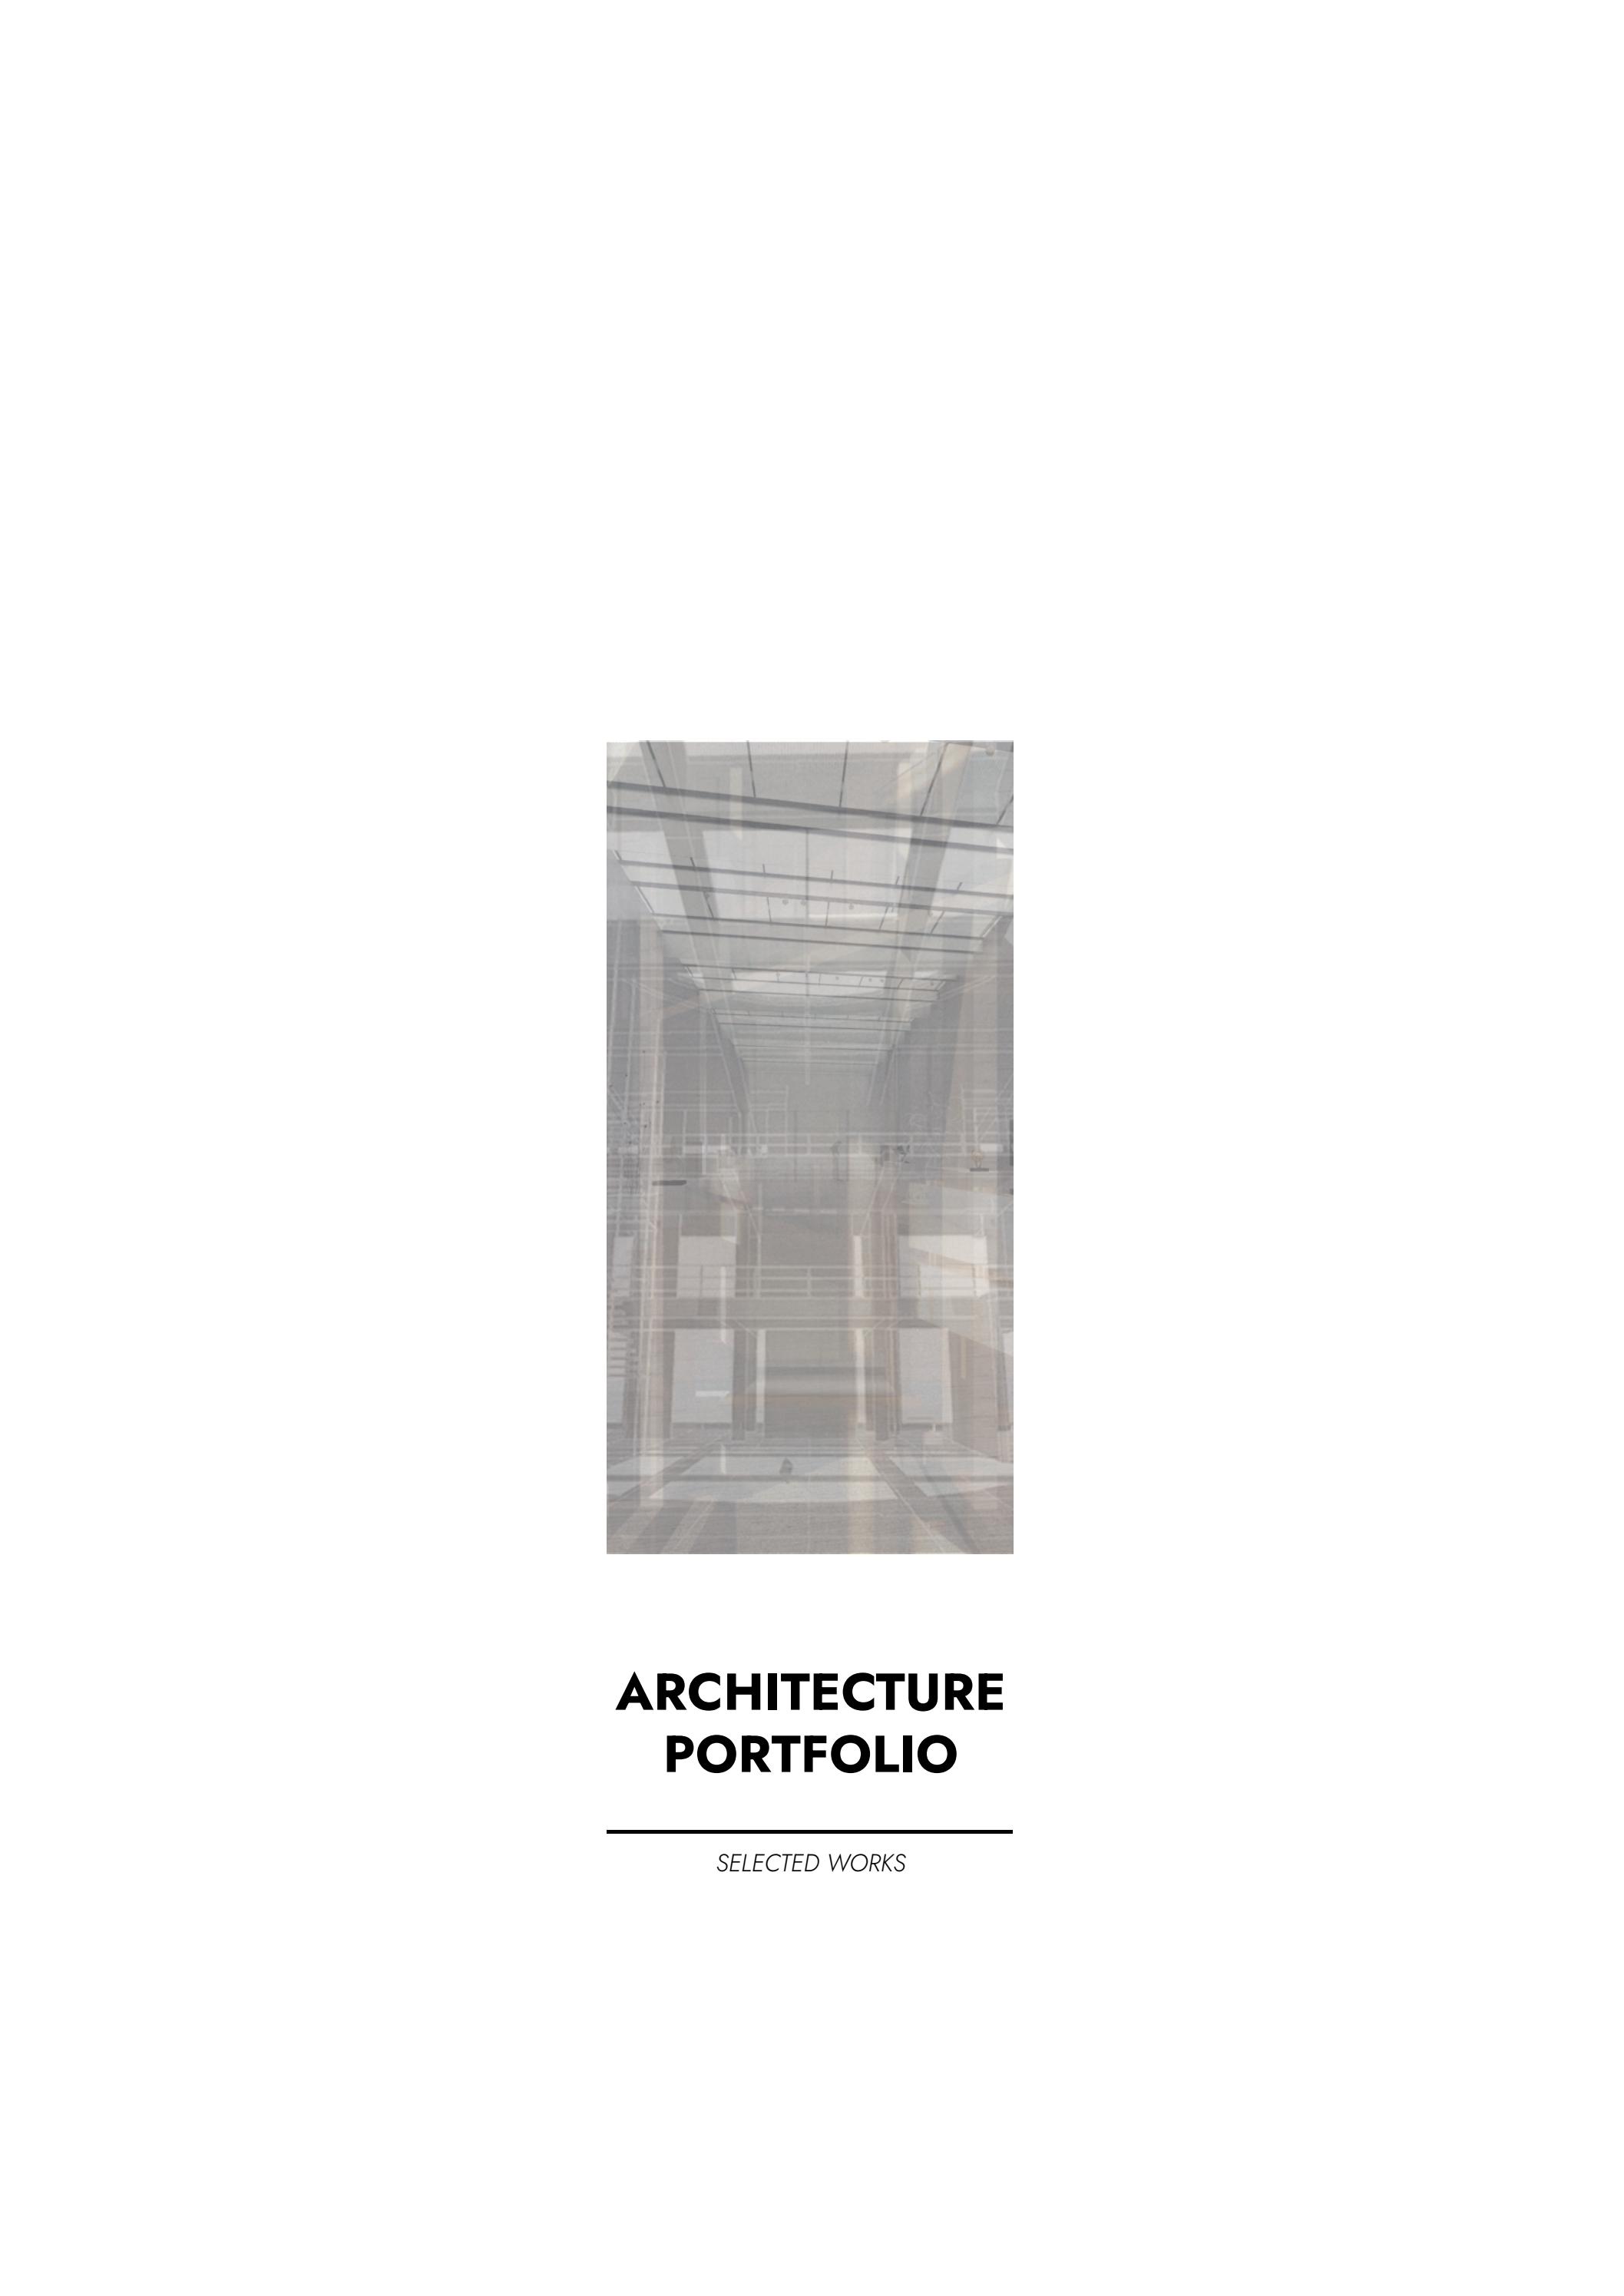 ARCHITECTURE
PORTFOLIO

SELECTED WORKS